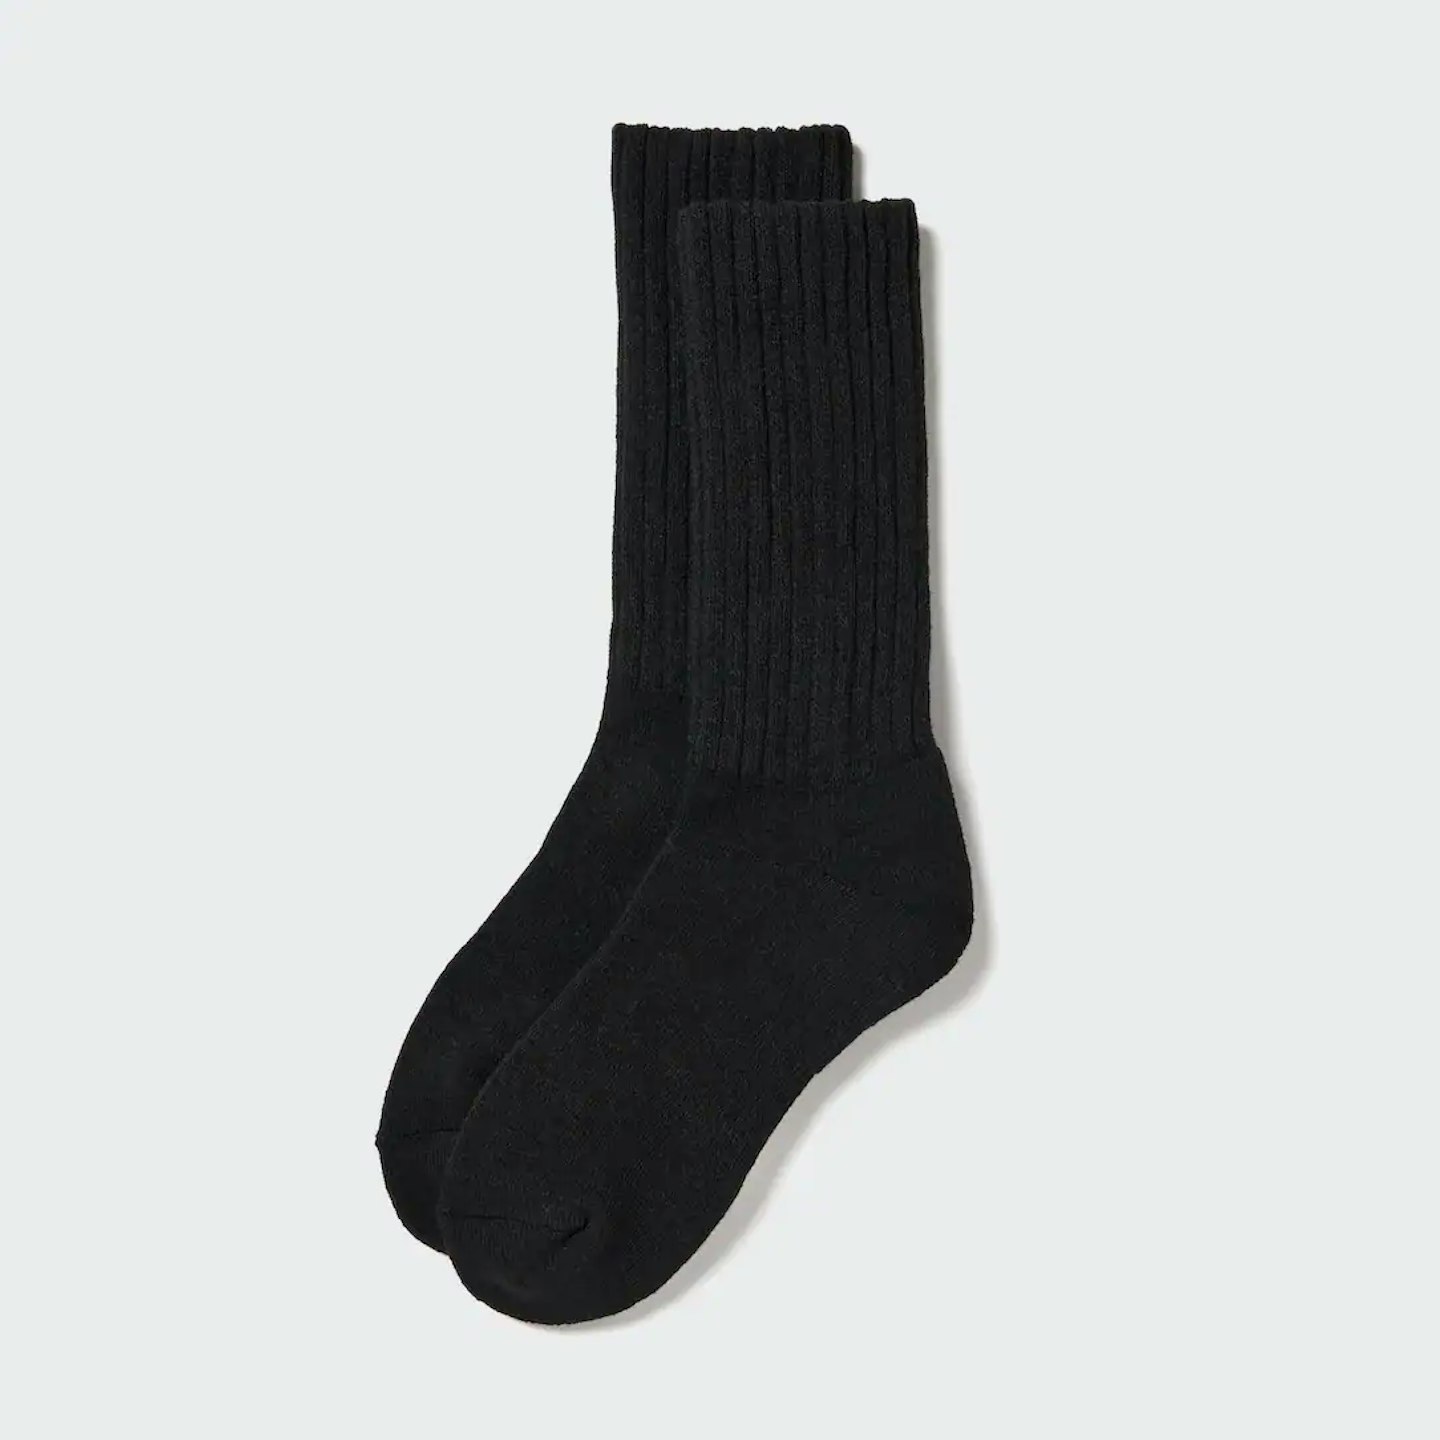 uniqlo thermal socks 